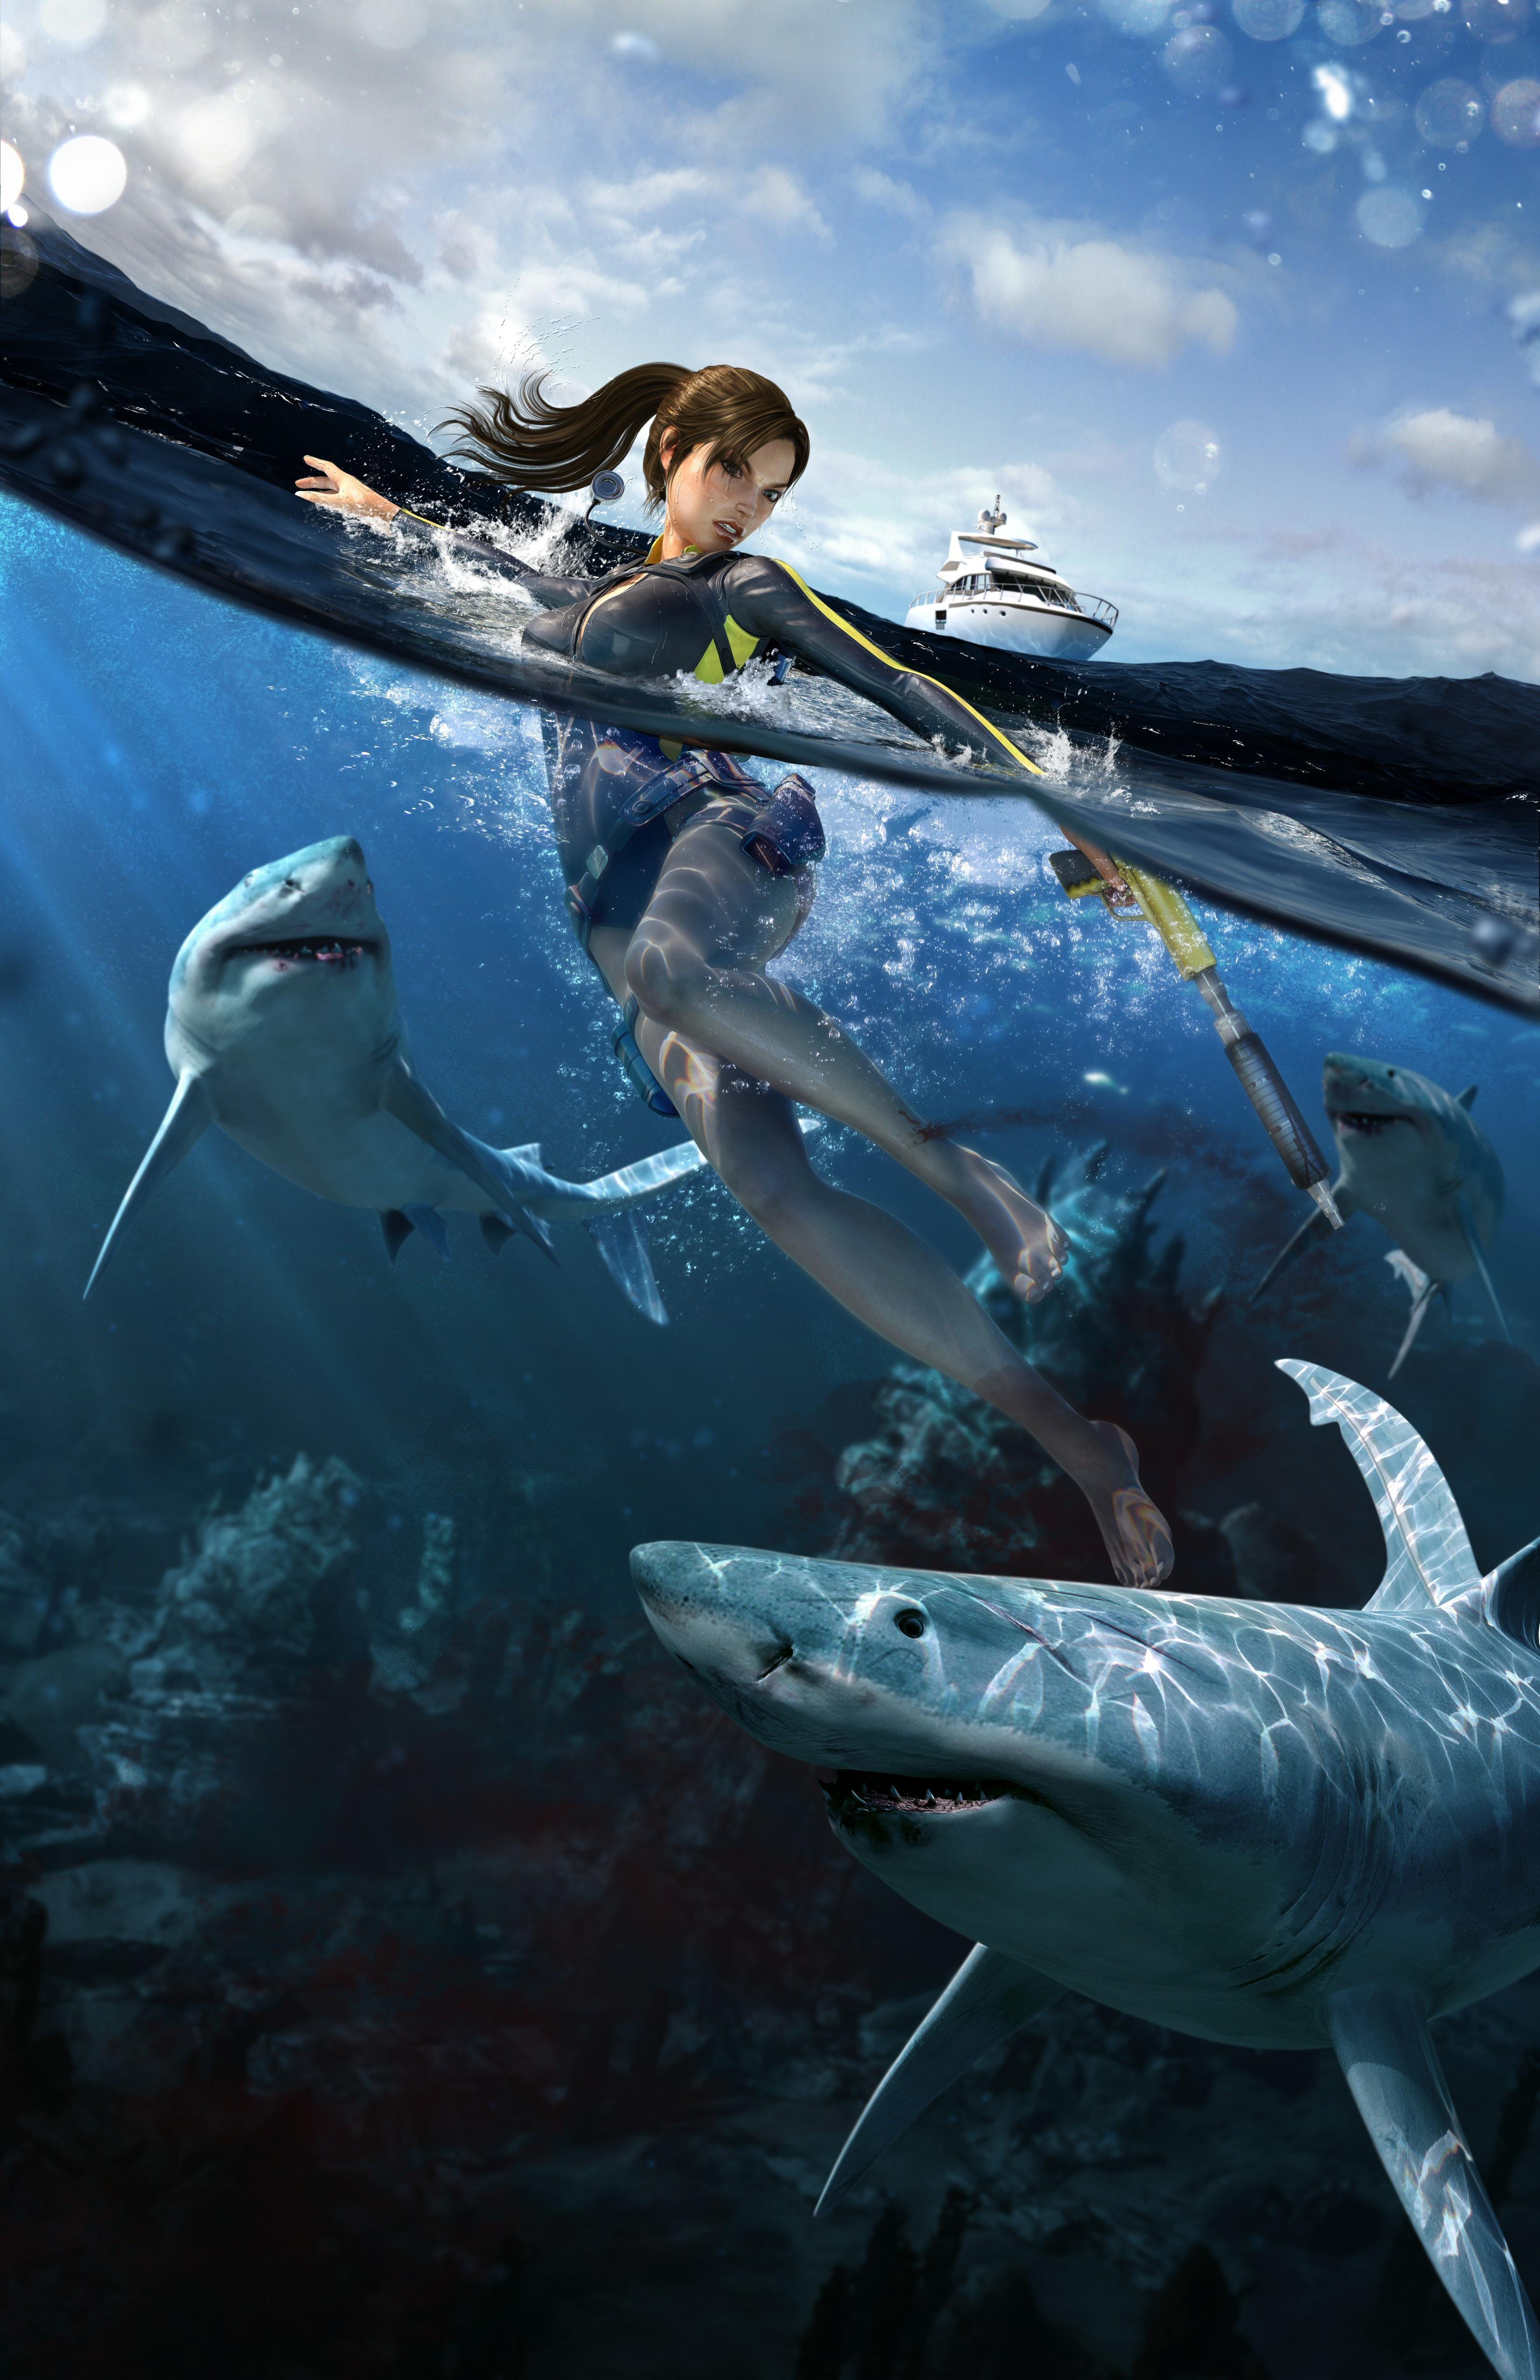 HD wallpaper, Tomb Raider Underworld, Lara Croft, Water, Sharks